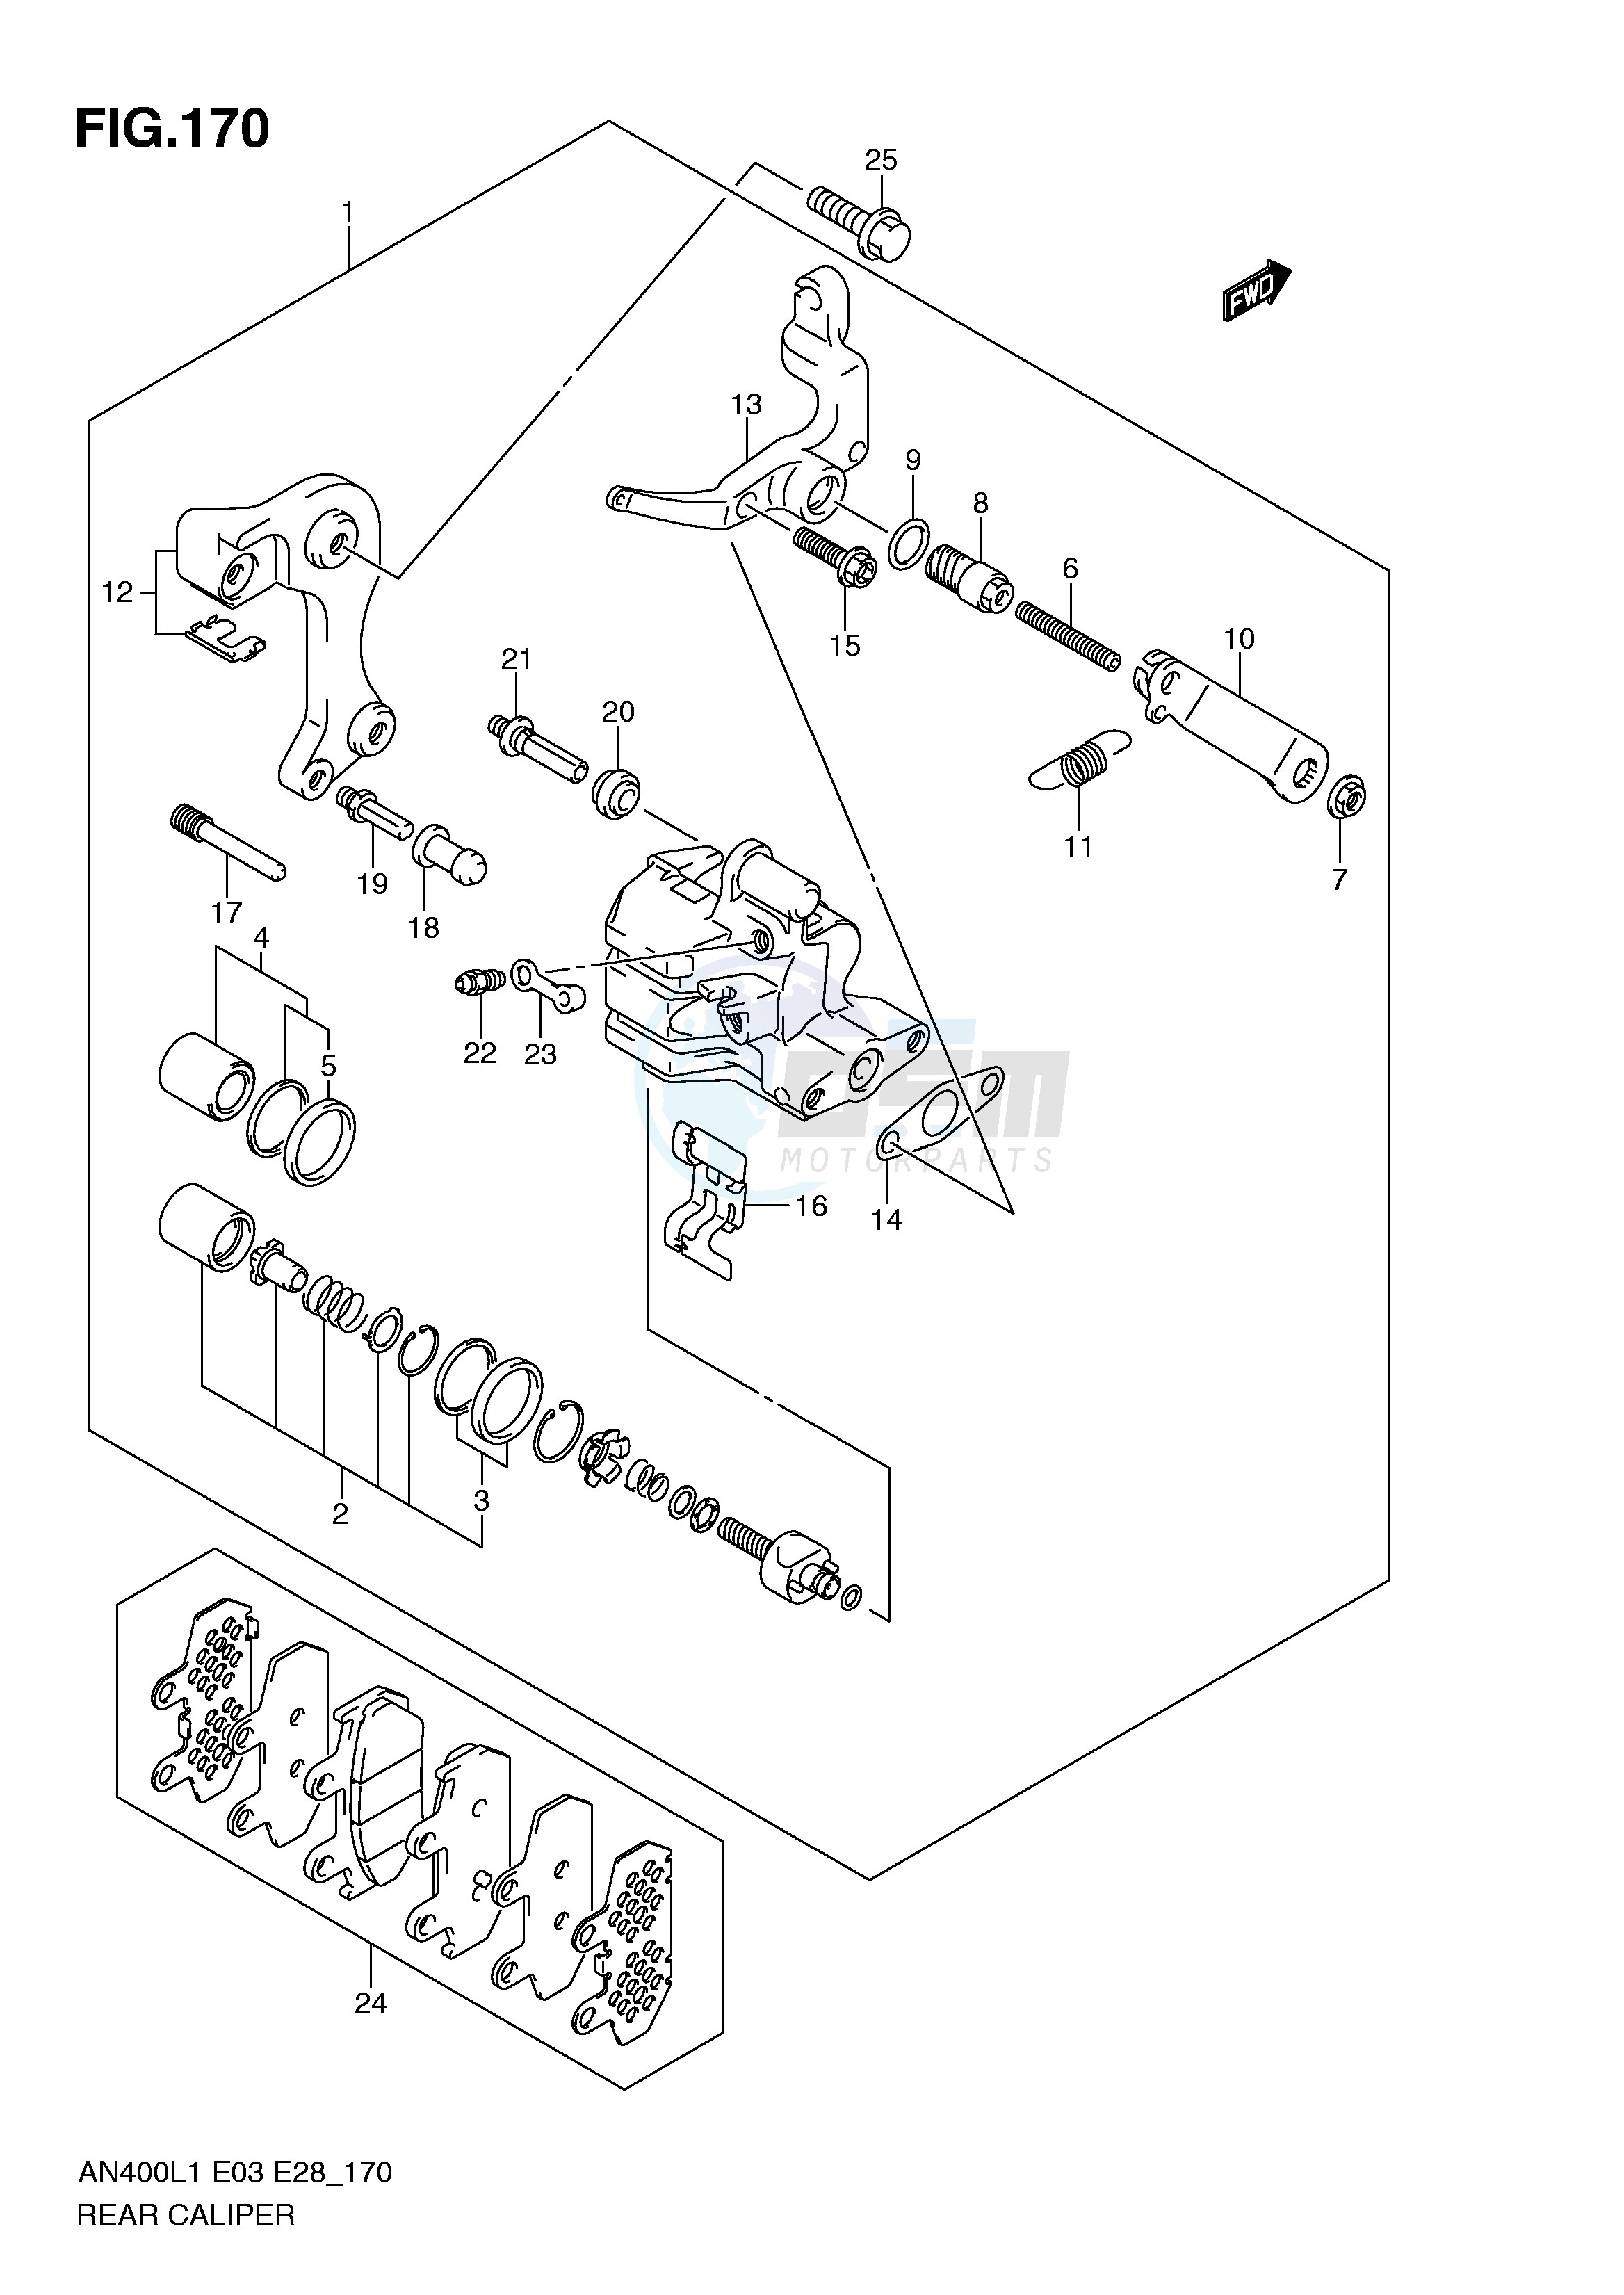 REAR CALIPER (AN400L1 E33) blueprint